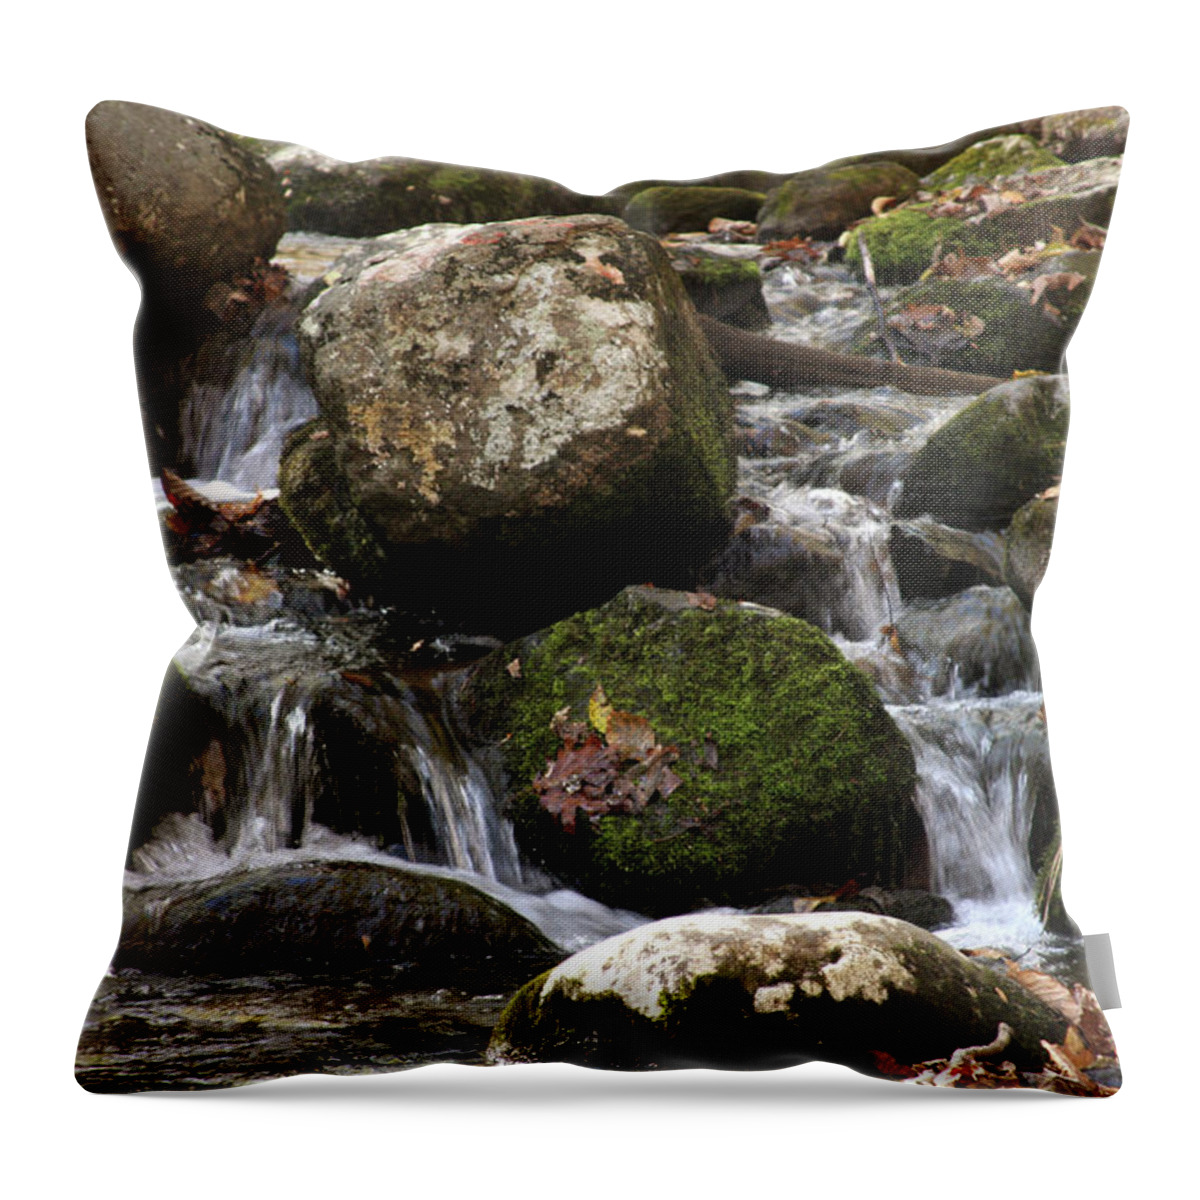 Stream Throw Pillow featuring the photograph Mountain stream through rocks by Emanuel Tanjala